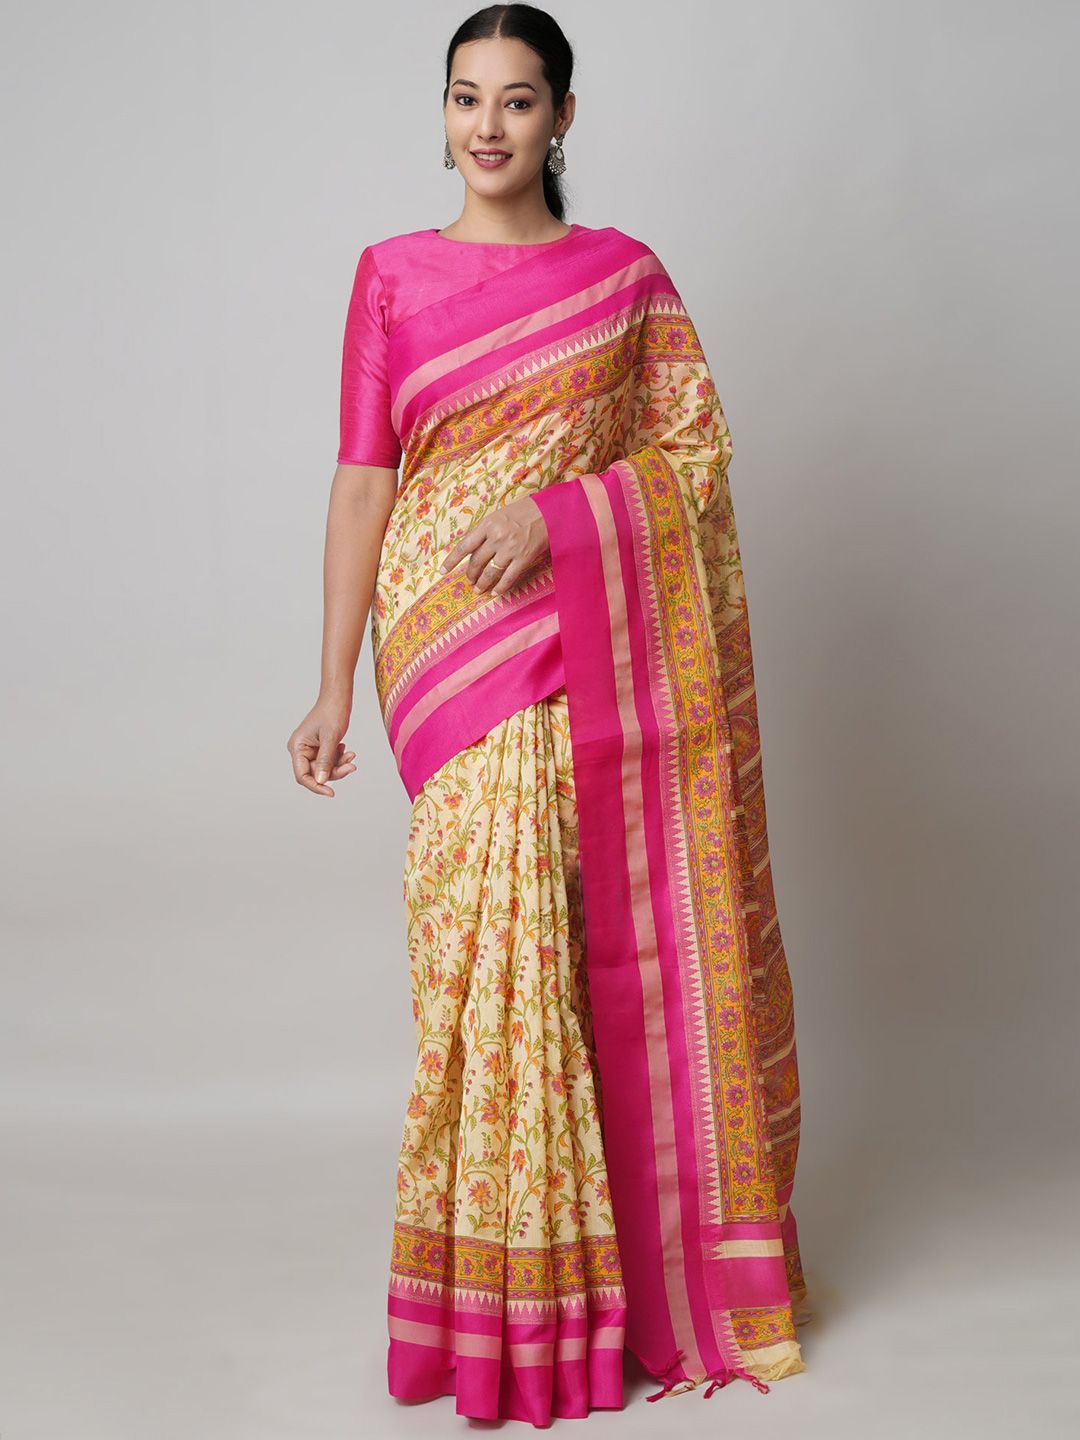 Unnati Silks Floral Printed Silk Cotton Chanderi Saree Price in India